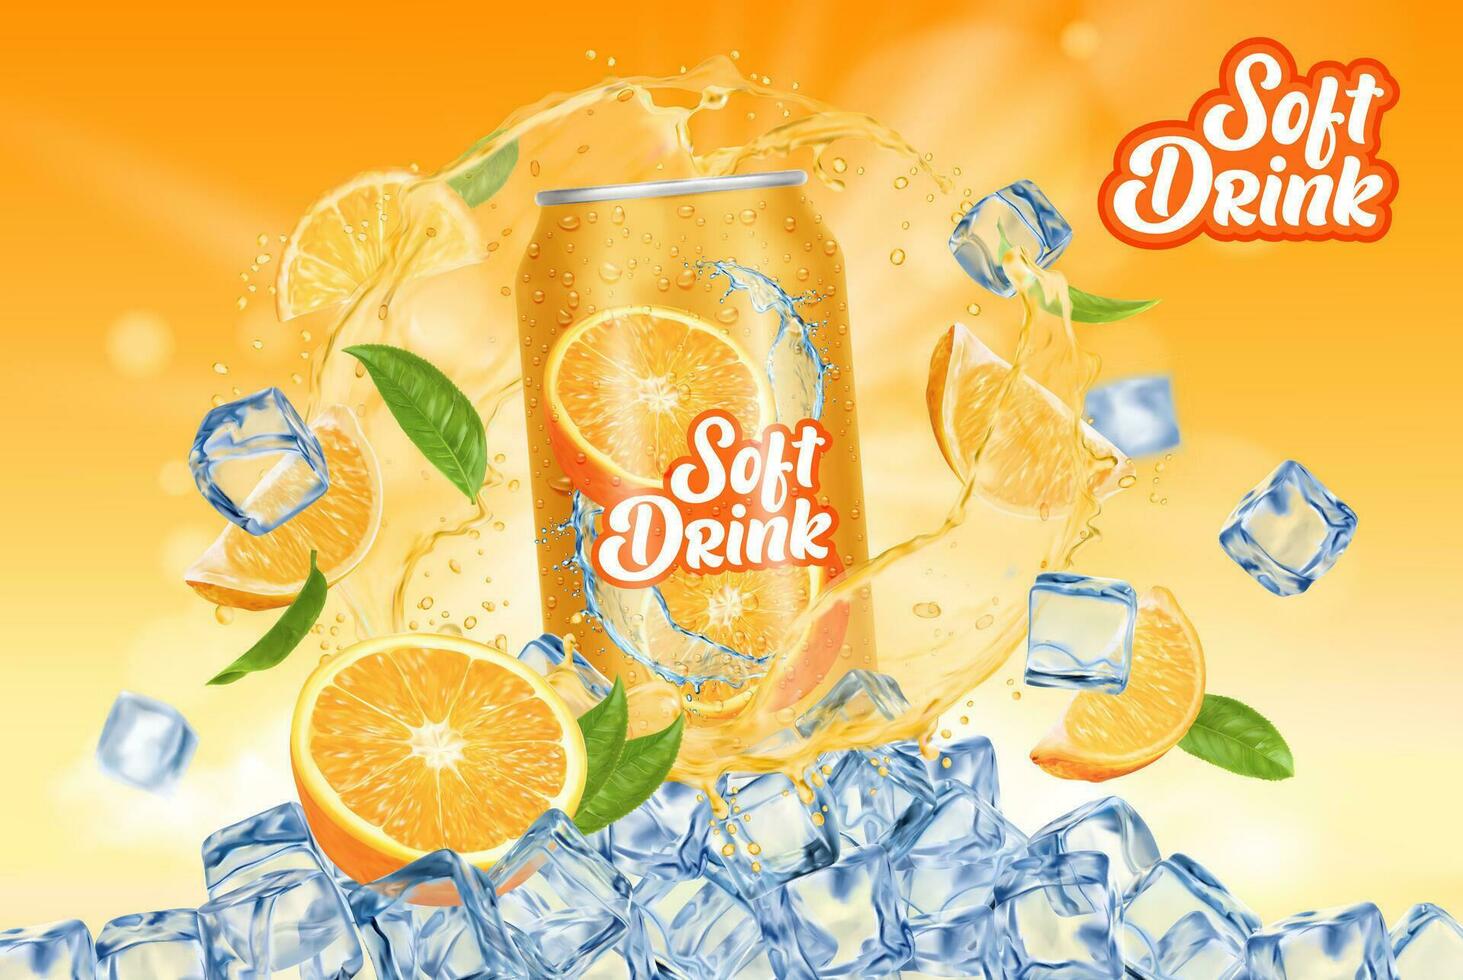 laranja beber pode, suco respingo e gelo cubos, refrigerante vetor